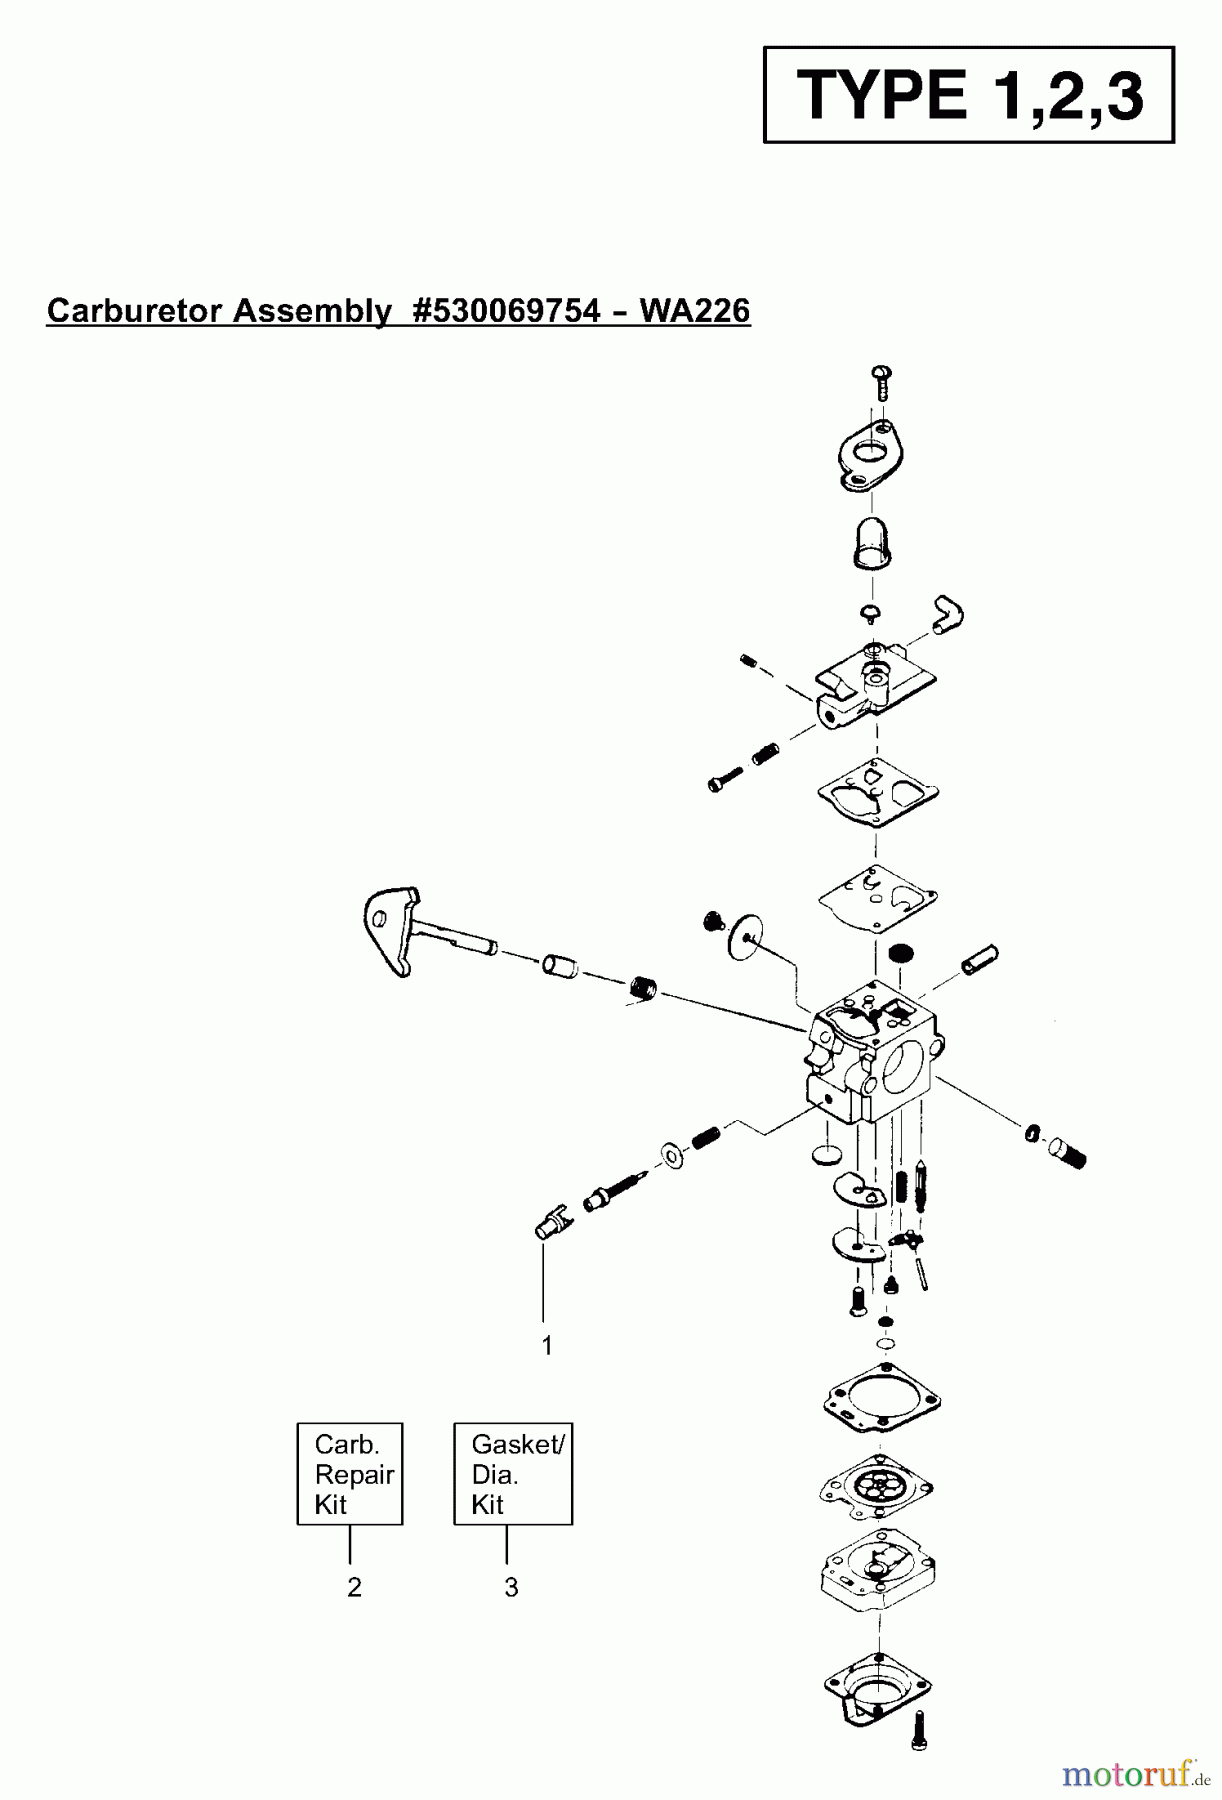  Poulan / Weed Eater Motorsensen, Trimmer Twistn Edge (Type 1) - Weed Eater String Trimmer Carburetor Assembly (WA226) P/N 530069754